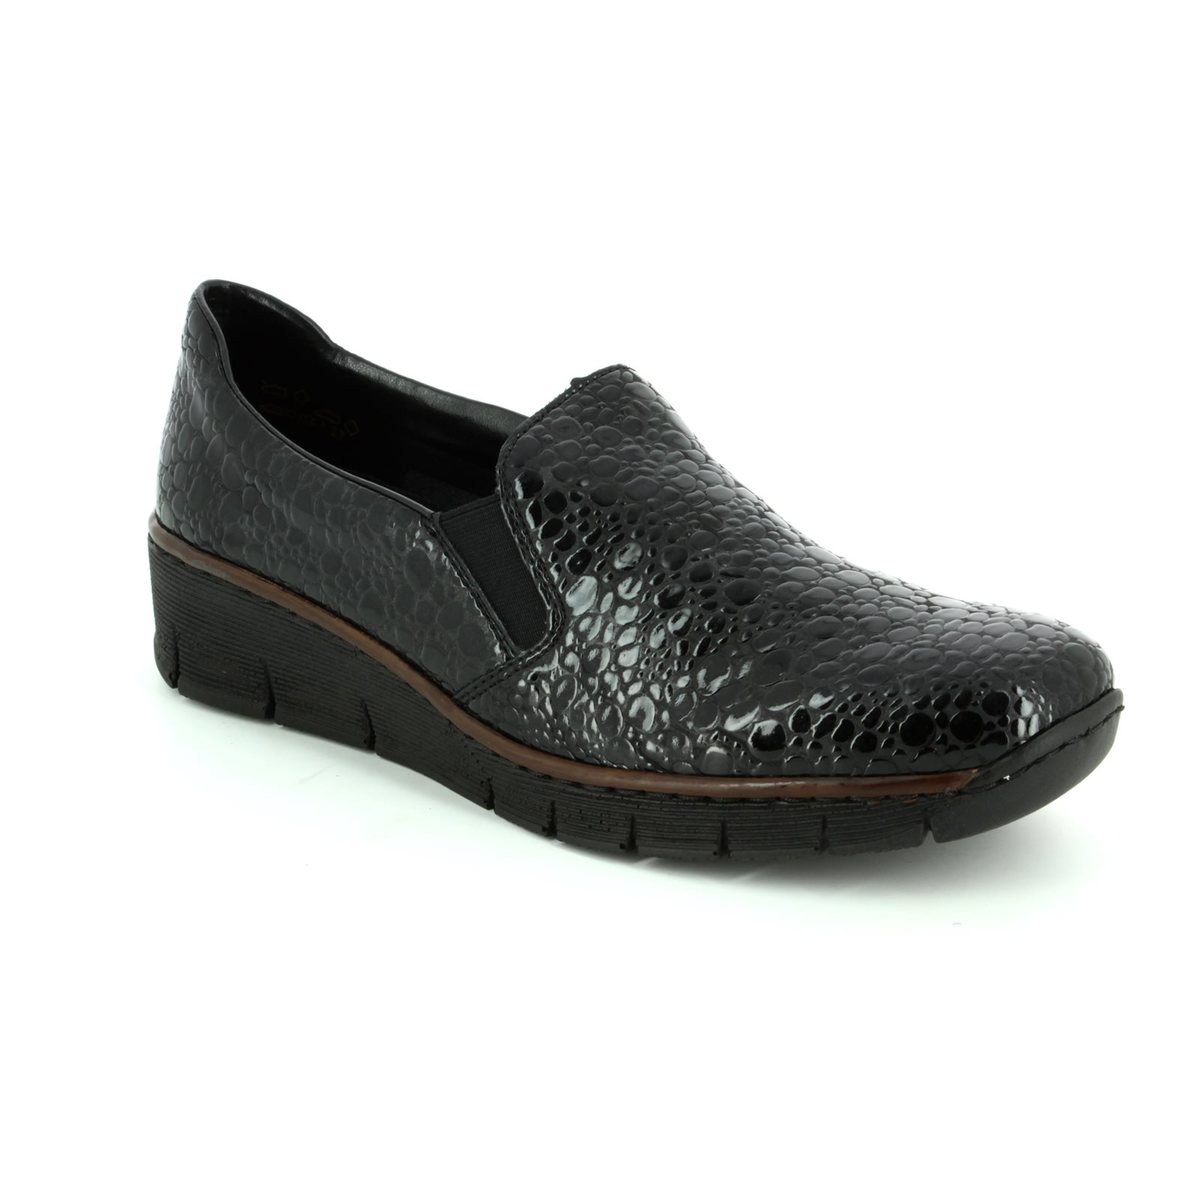 Rieker Bocciago Black Croc Womens Comfort Slip On Shoes 53766-45 In Size 40 In Plain Black Croc Effect